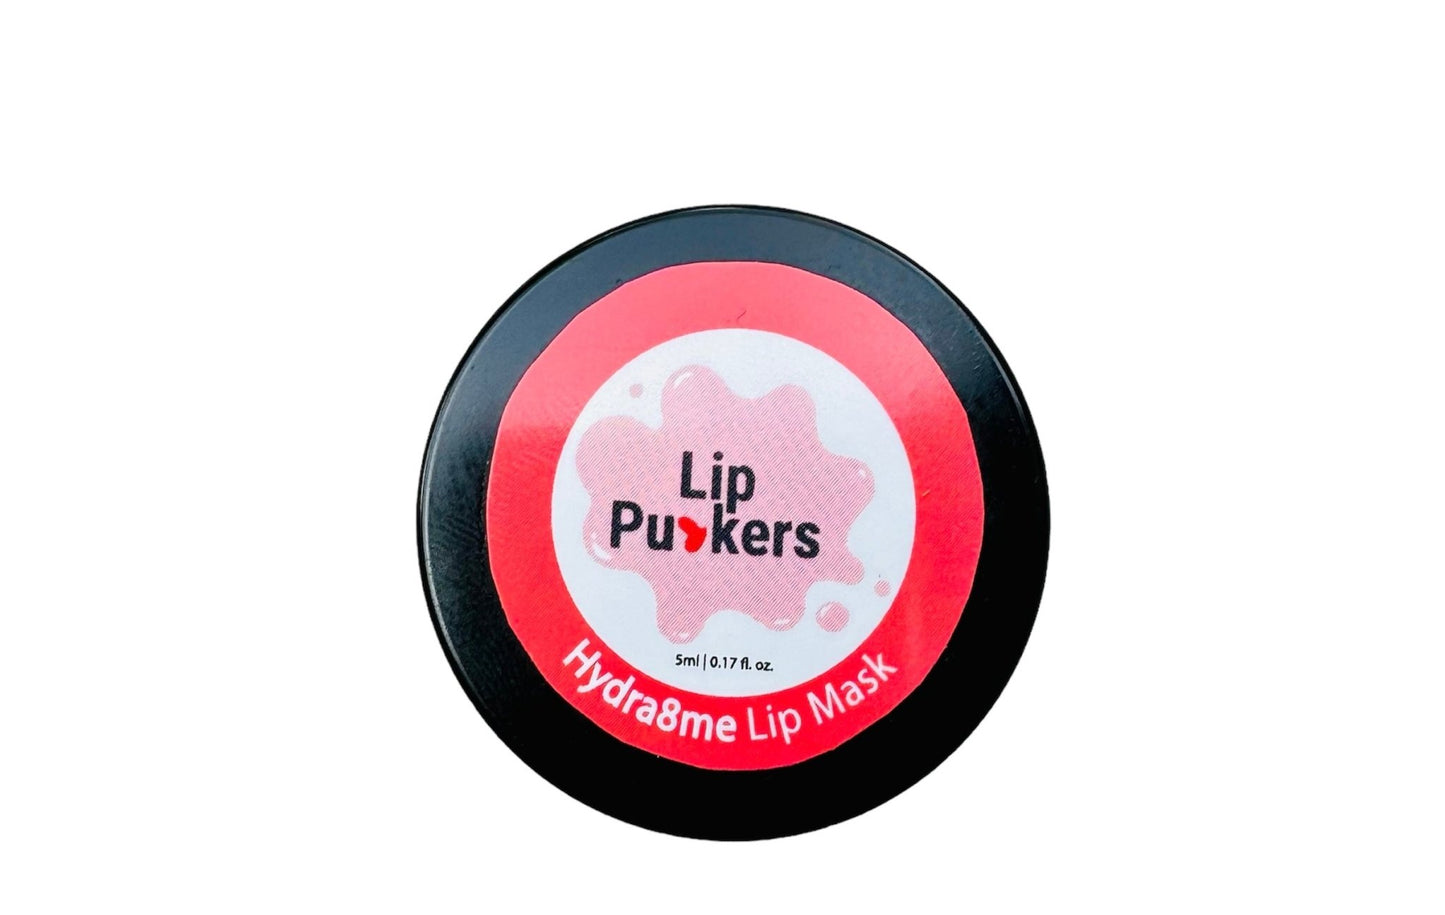 Hydra8me Lip Mask - Lip Puckers